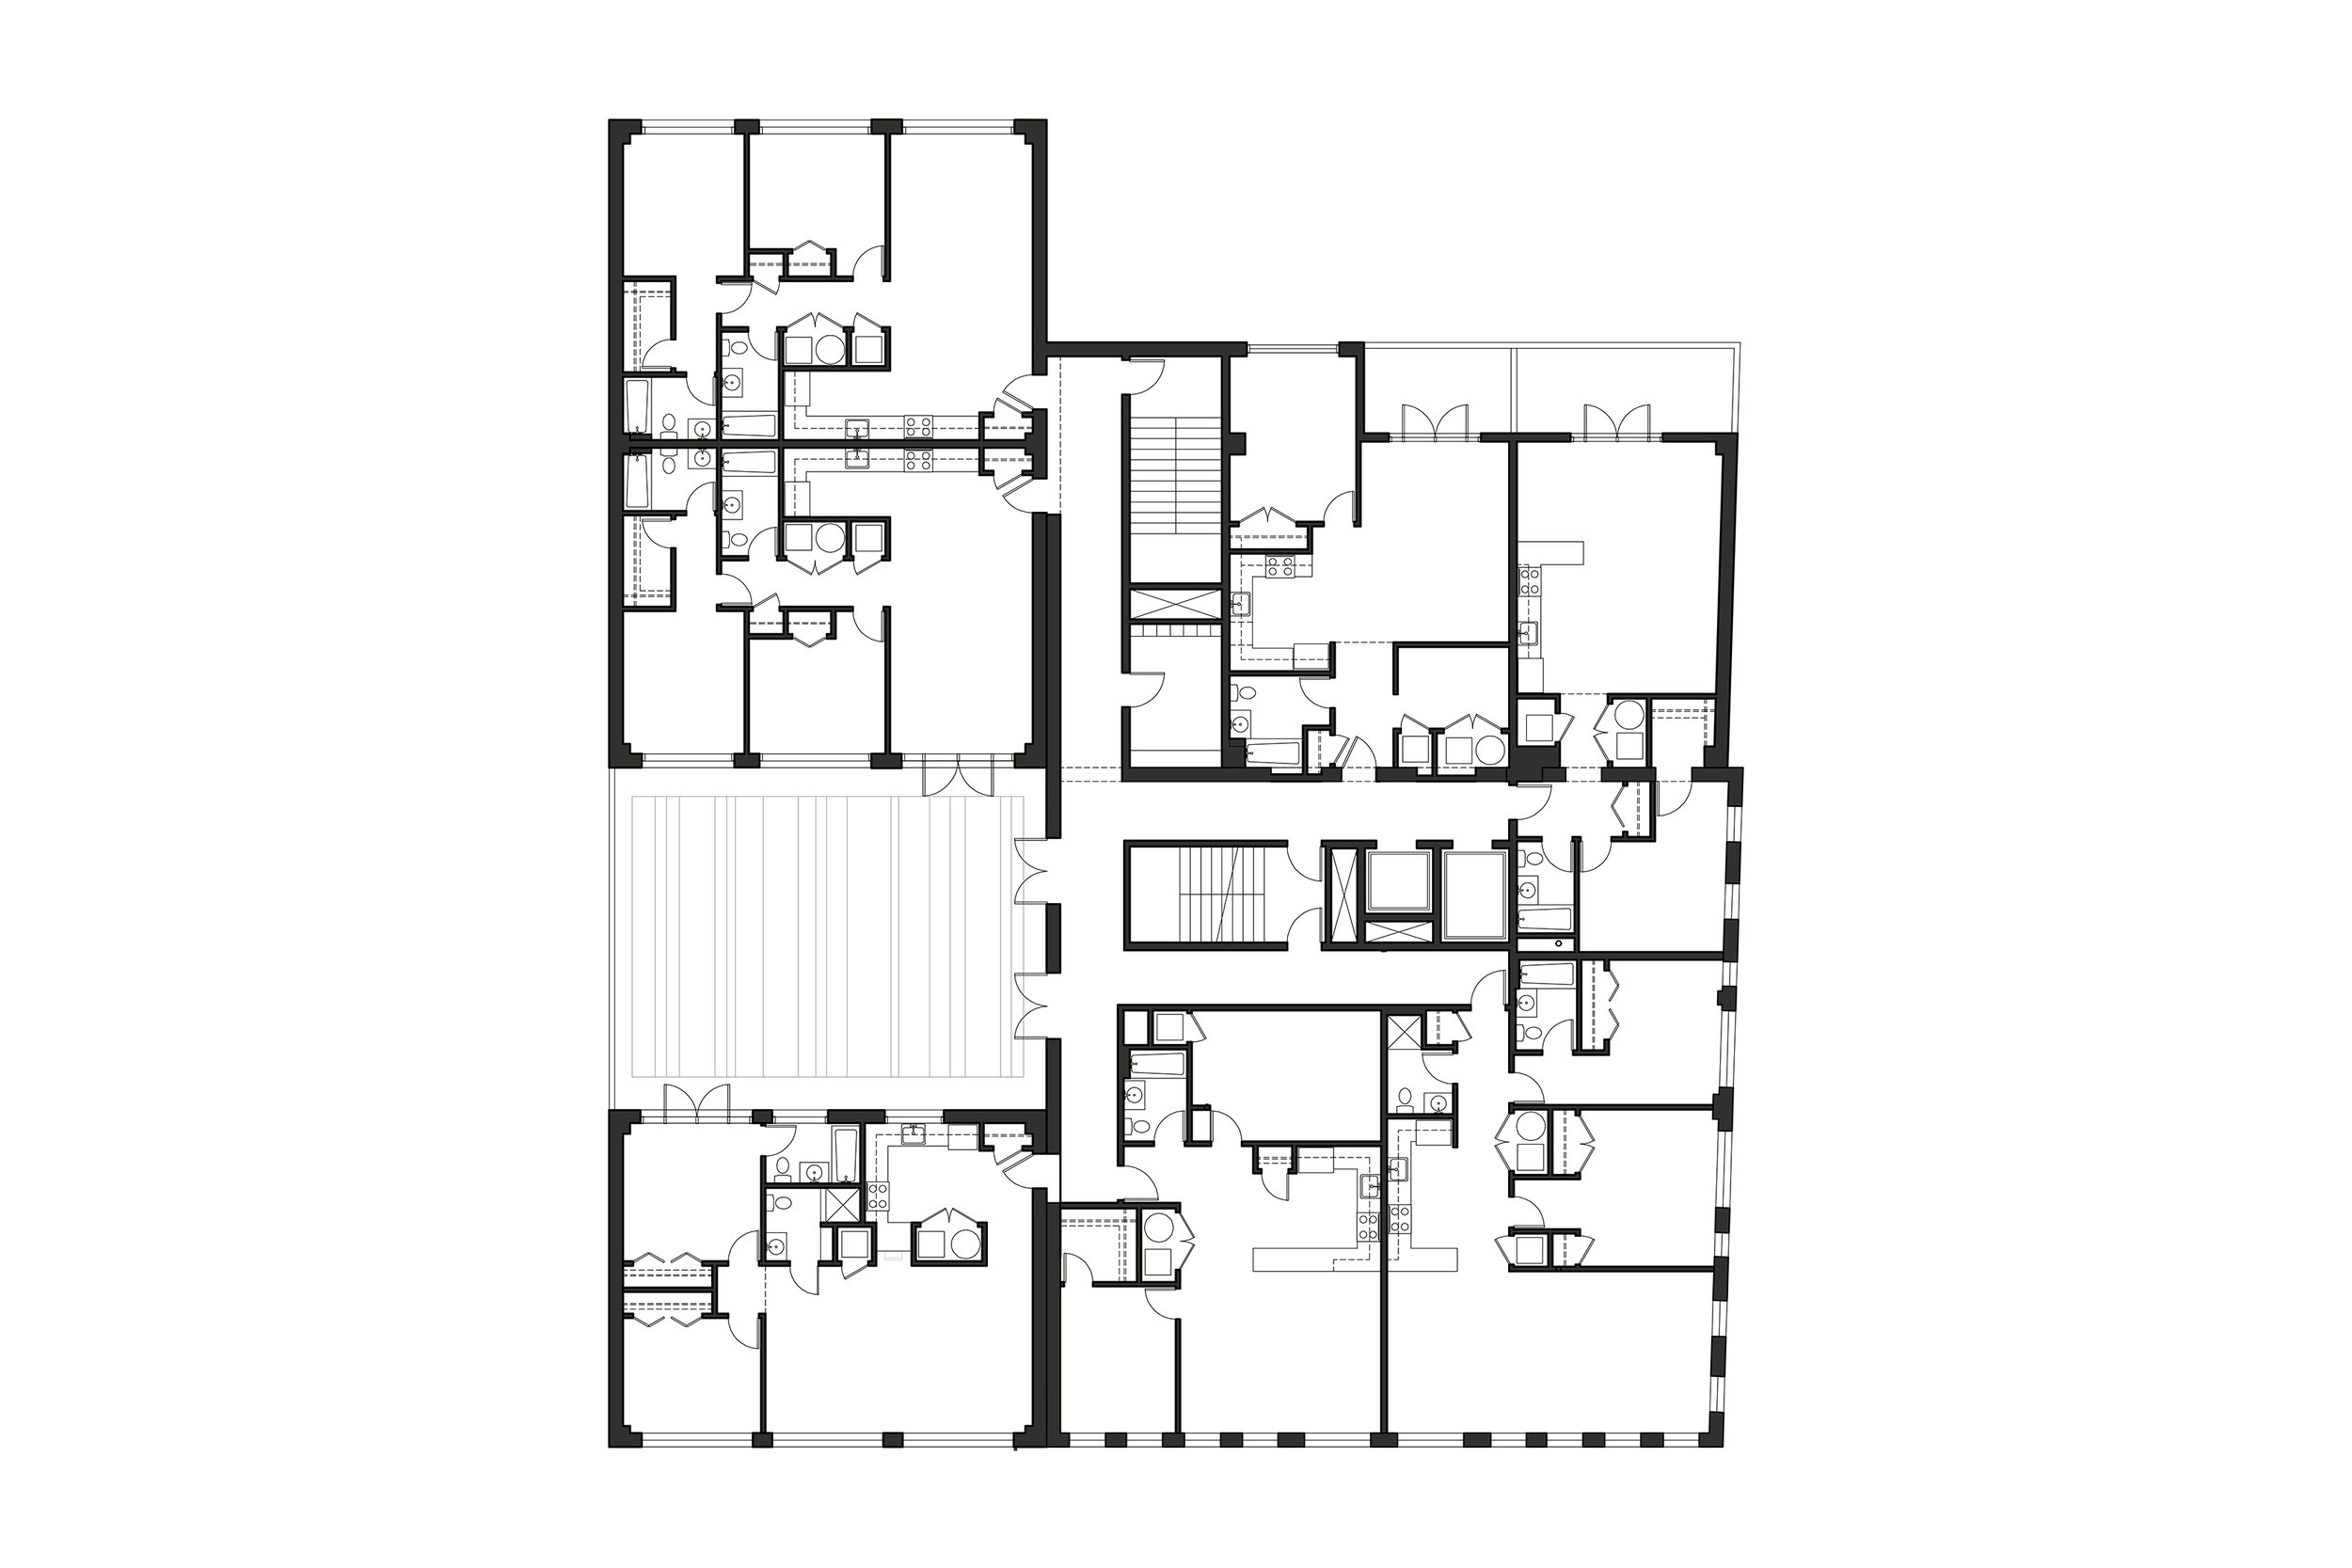  Floors 2 - 4 